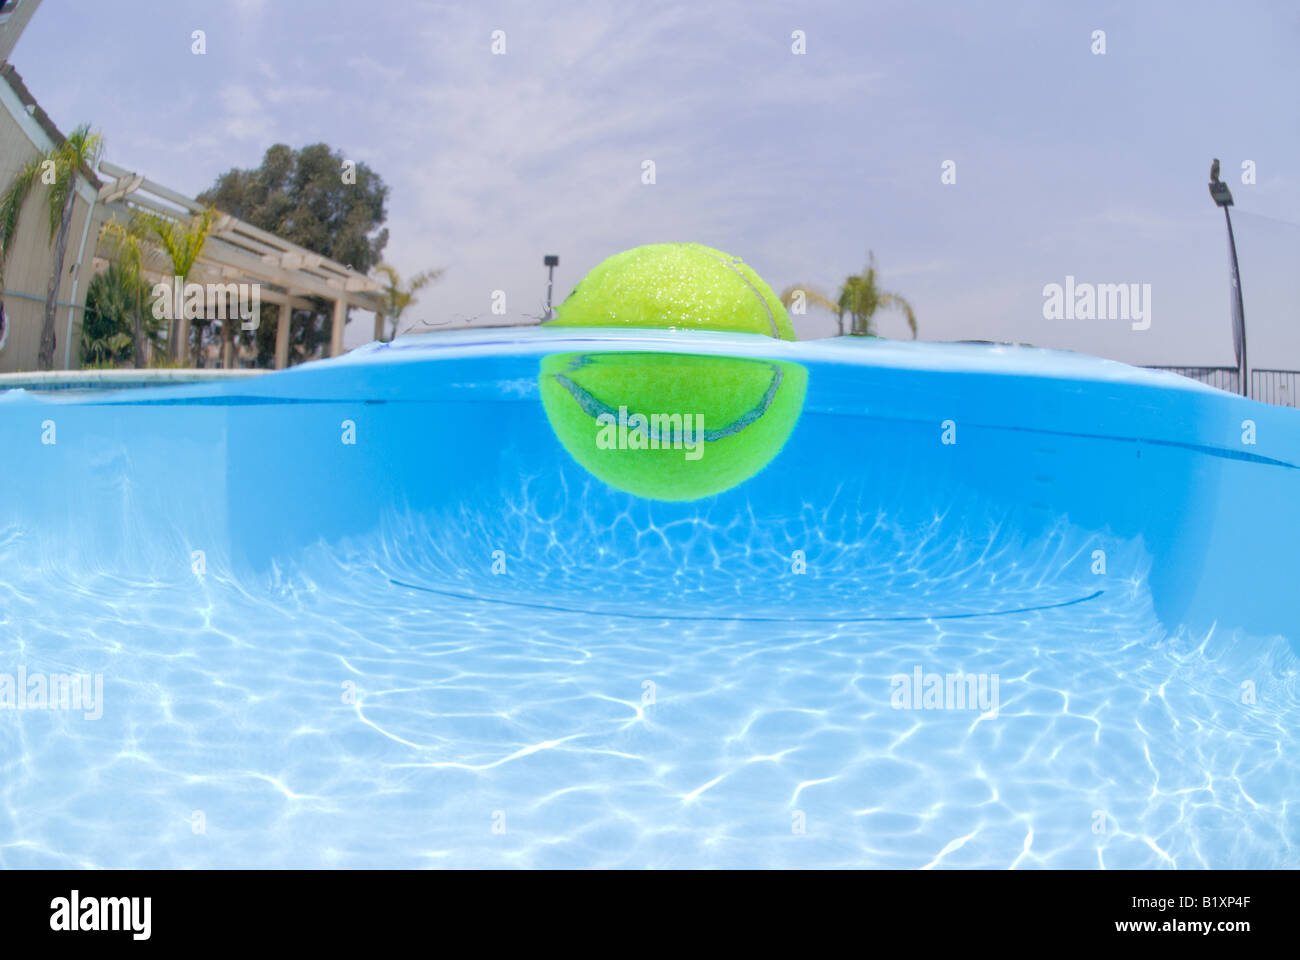 Balle de tennis floating in pool Banque D'Images